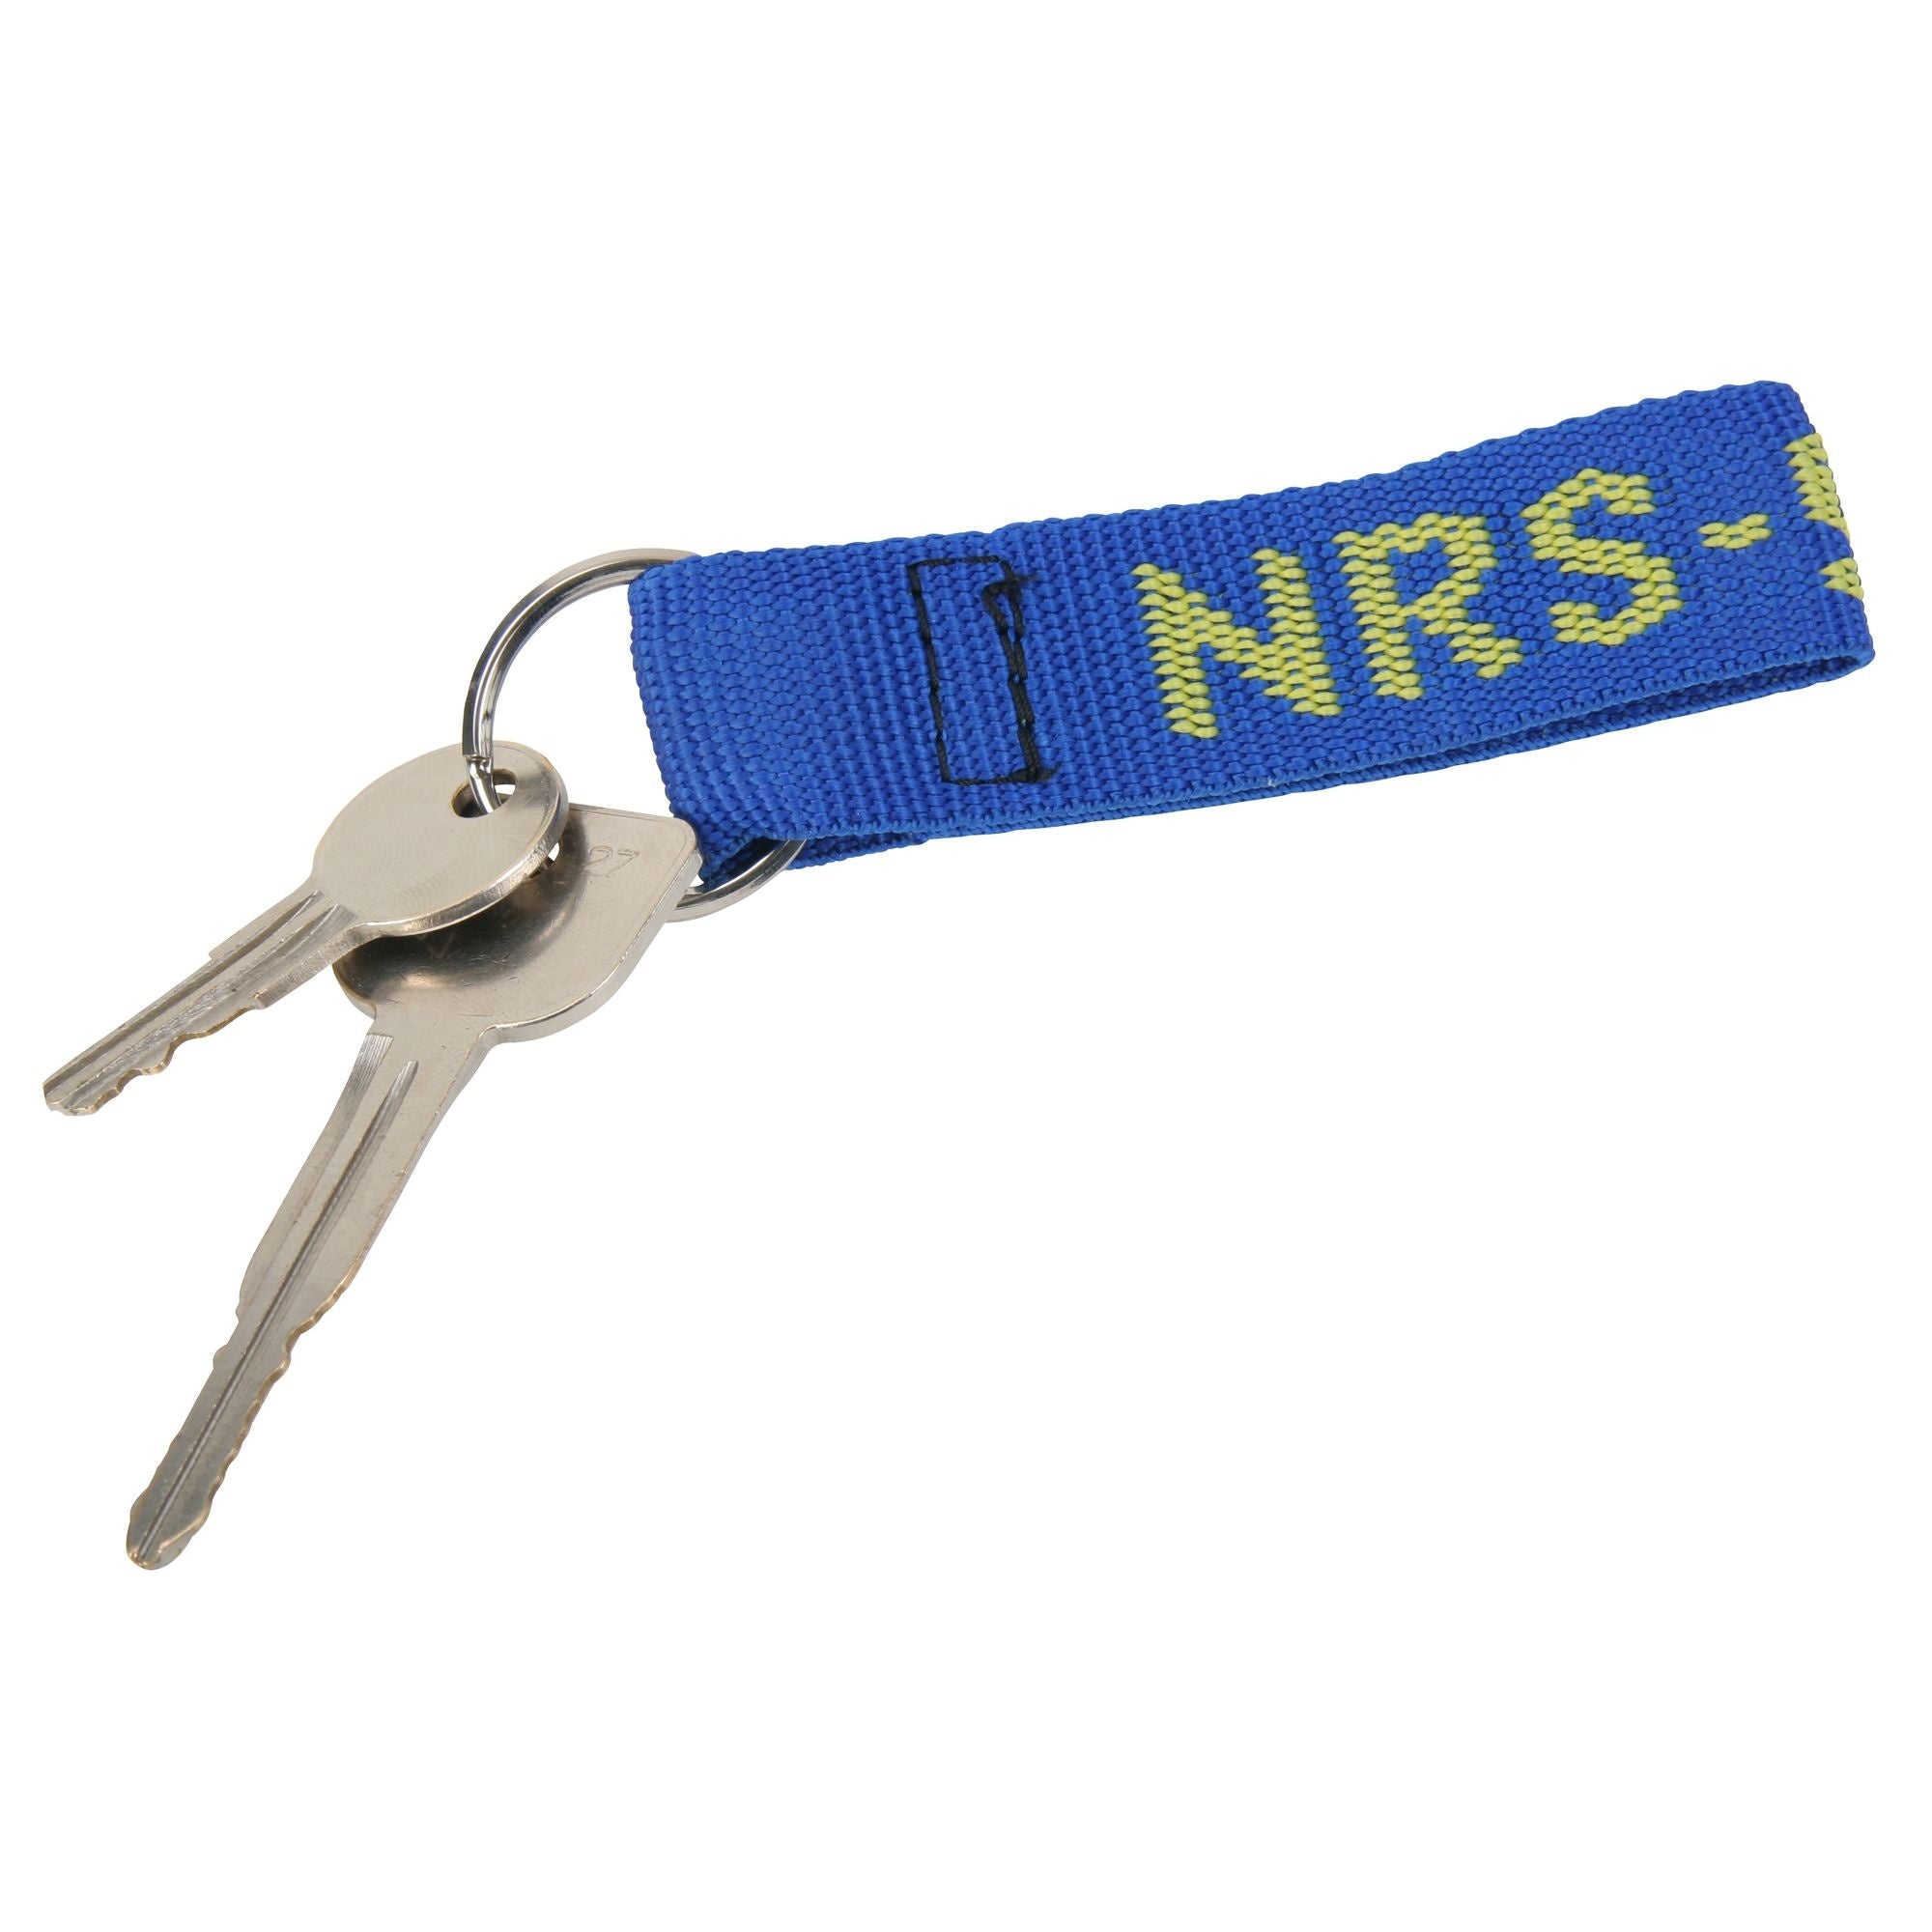 NRS - Strap Keychain